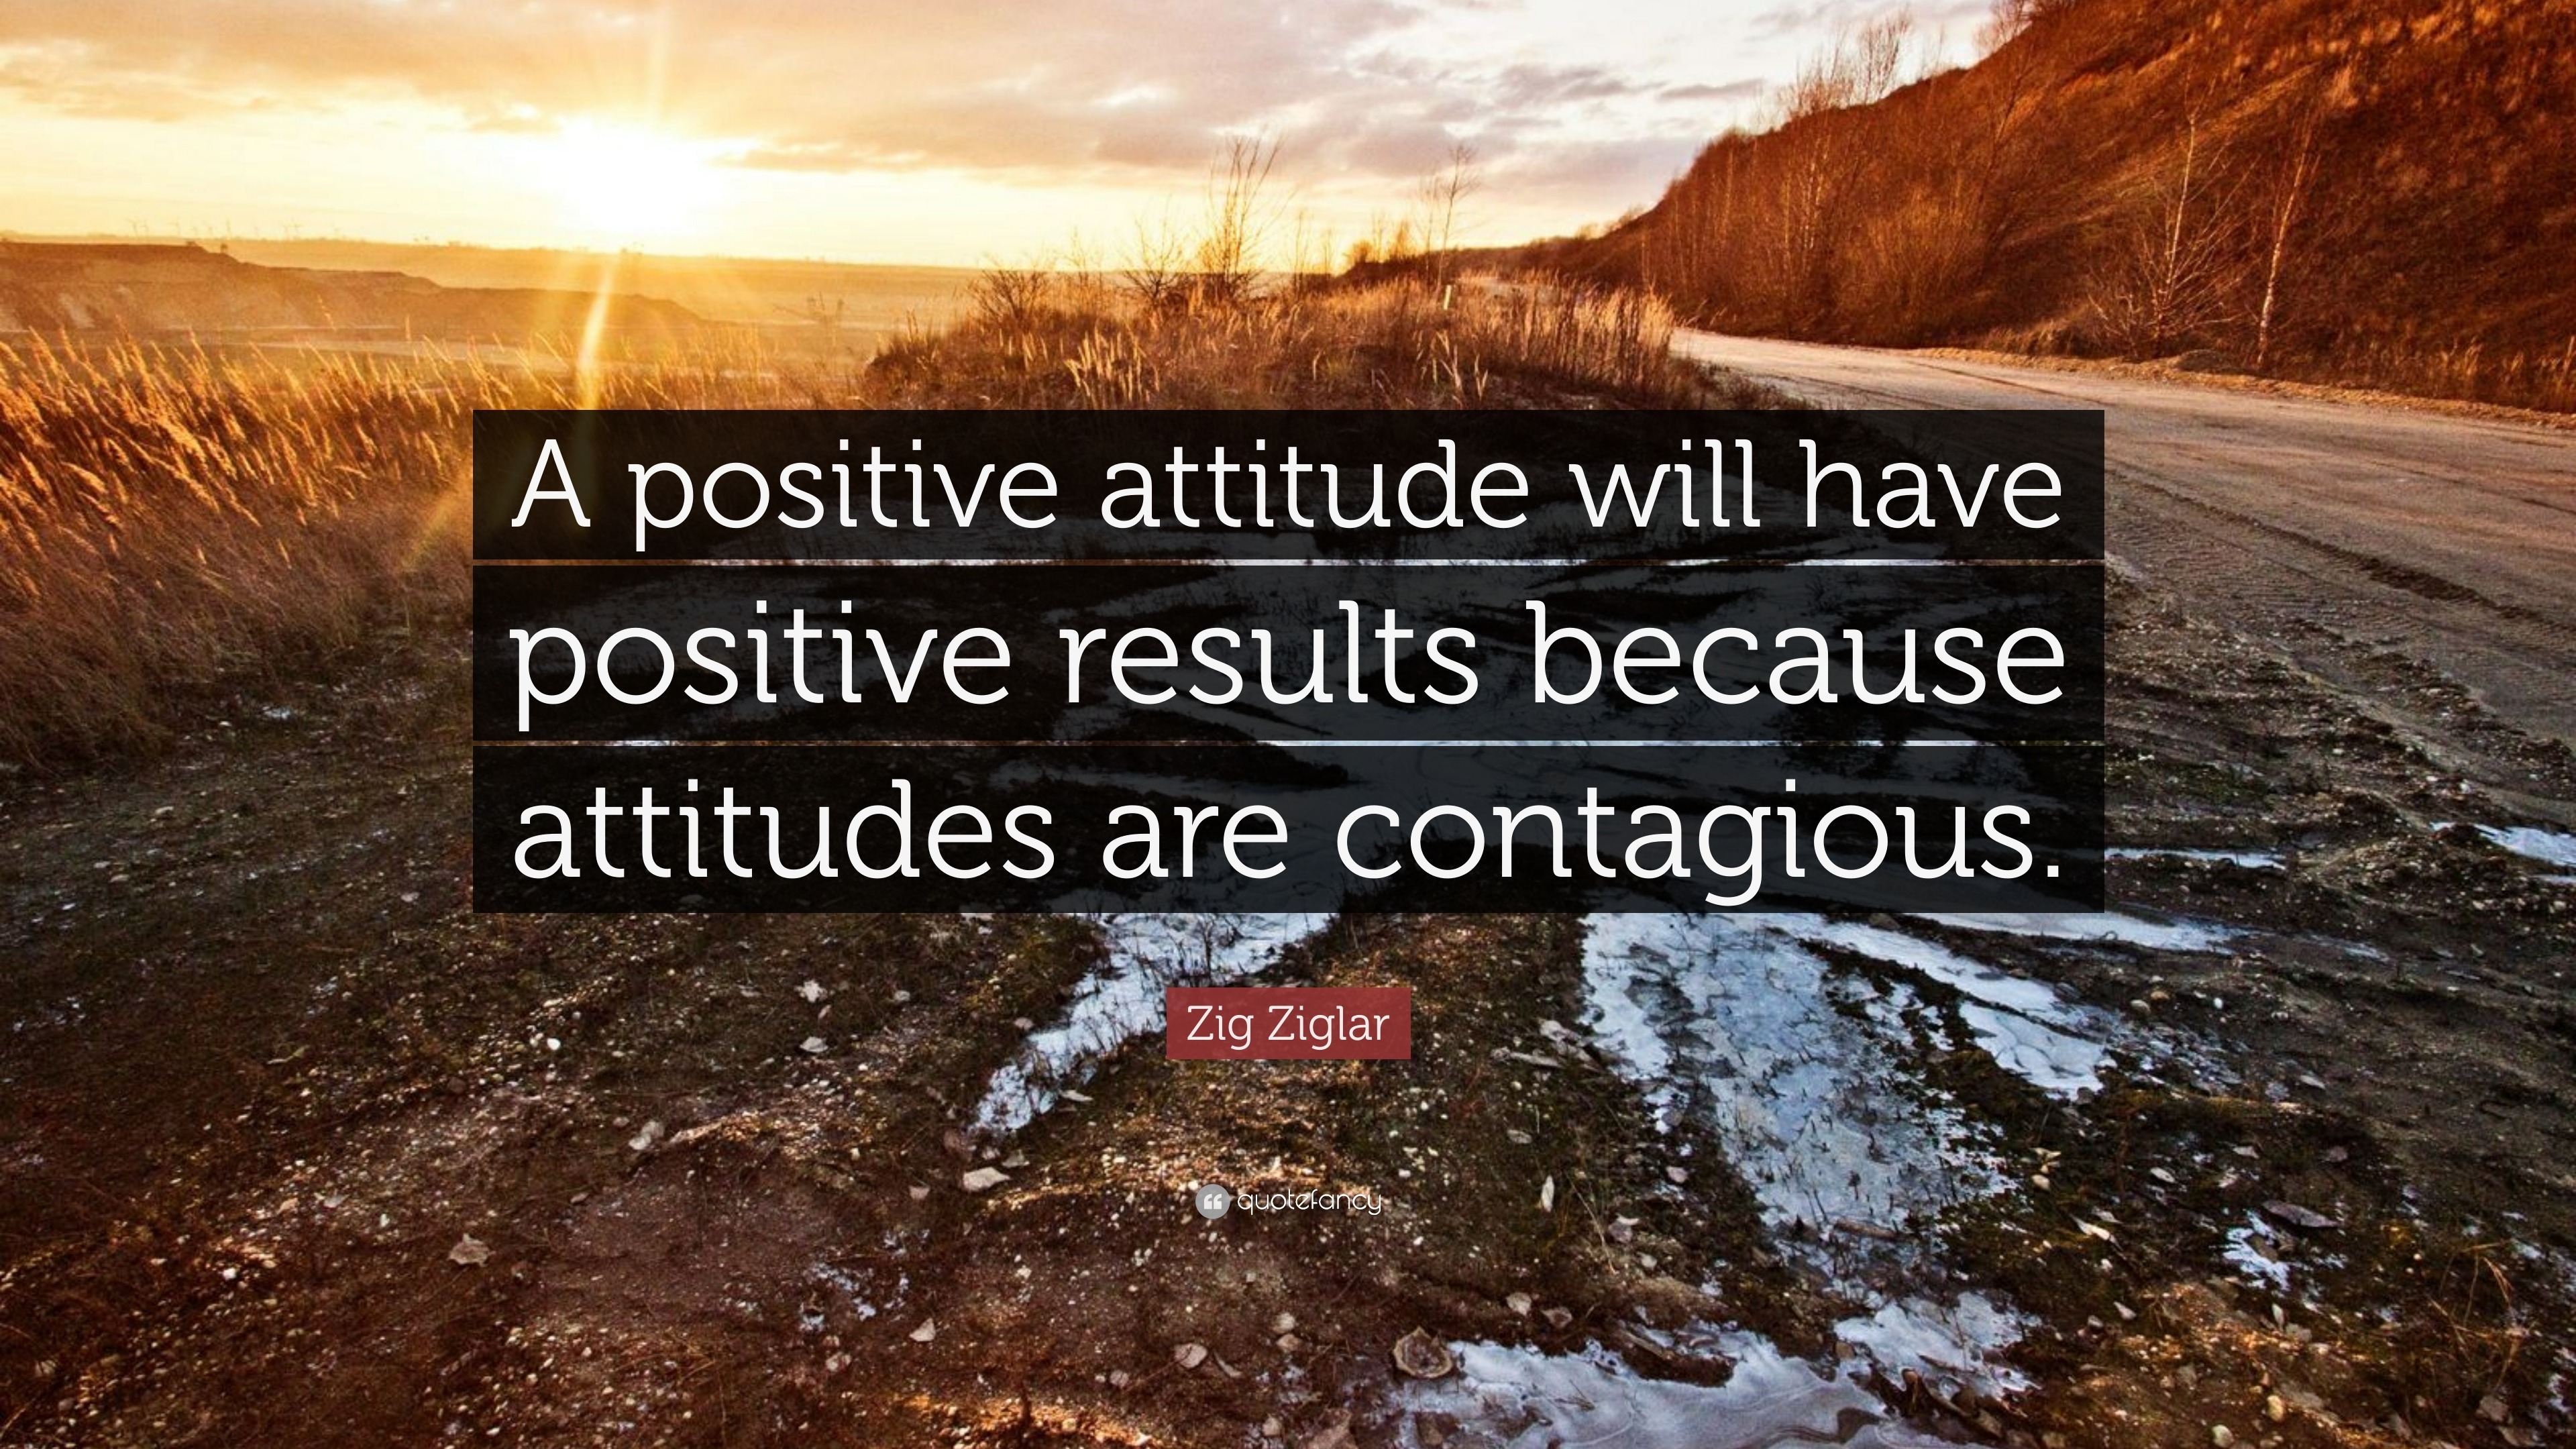 Zig Ziglar Quote “A positive attitude will have positive